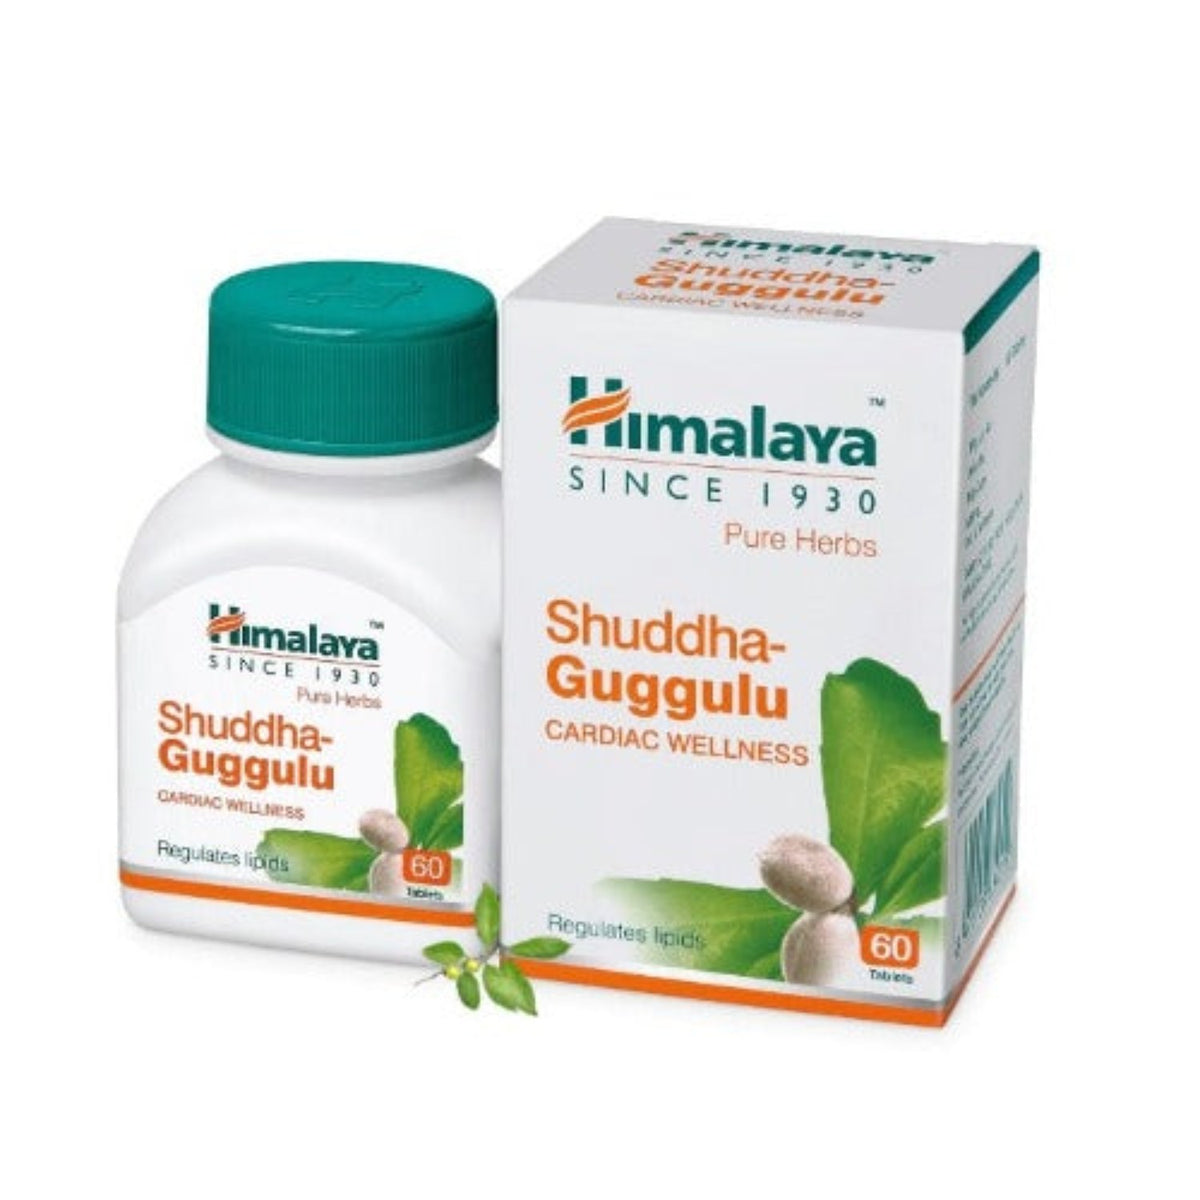 Himalaya Pure Herbs Cardiac Wellness Травяной аюрведический шуддха-гуггулу, регулирующий липиды, 60 таблеток